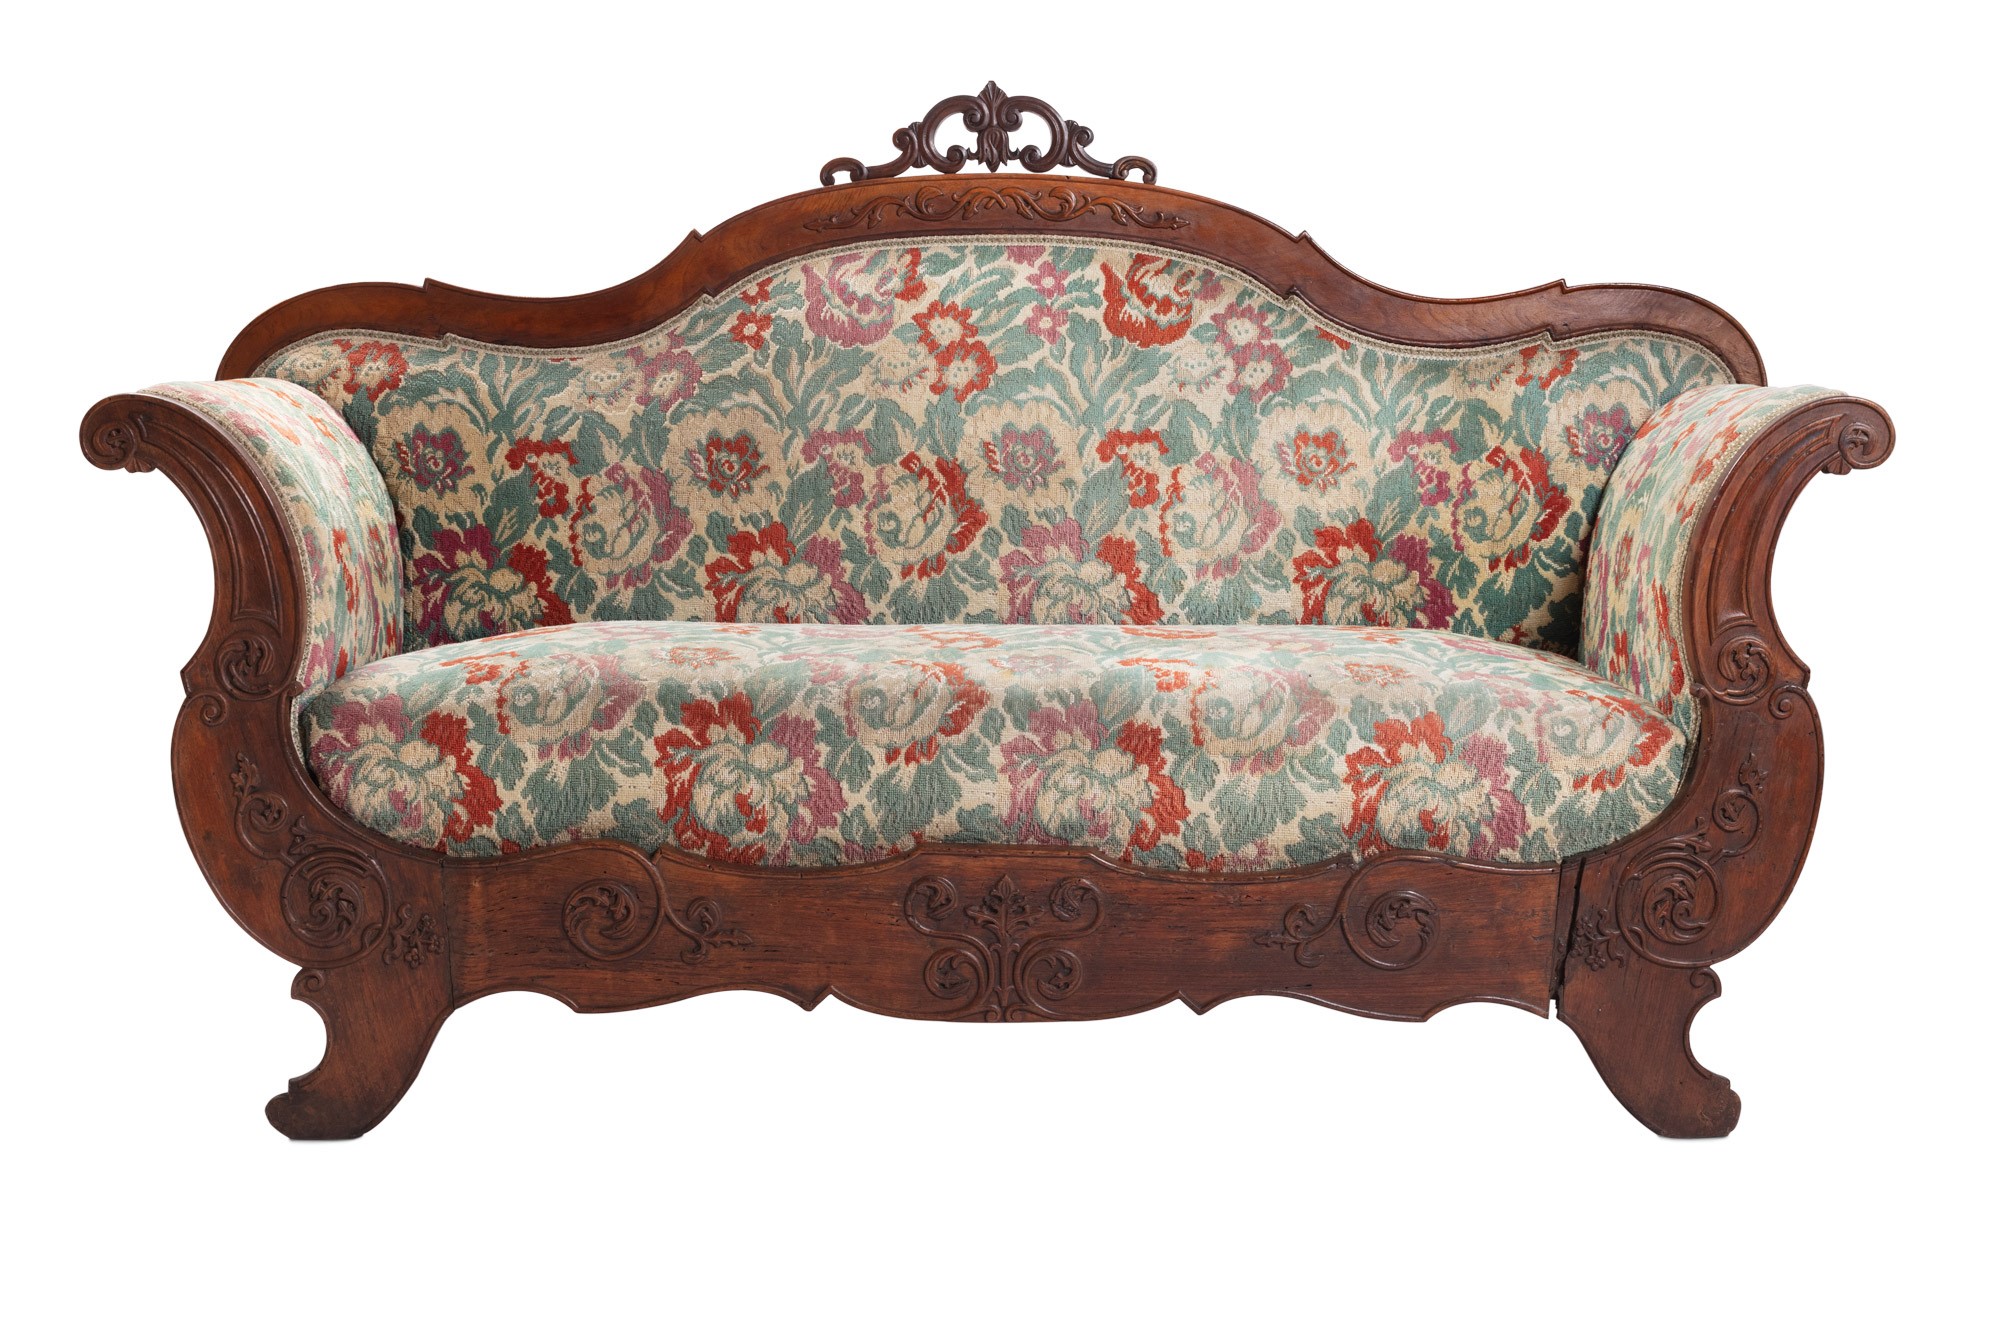 Walnut wood sofa manifacture ligure, mid 19th century, shaped armrests and back, curly feet,